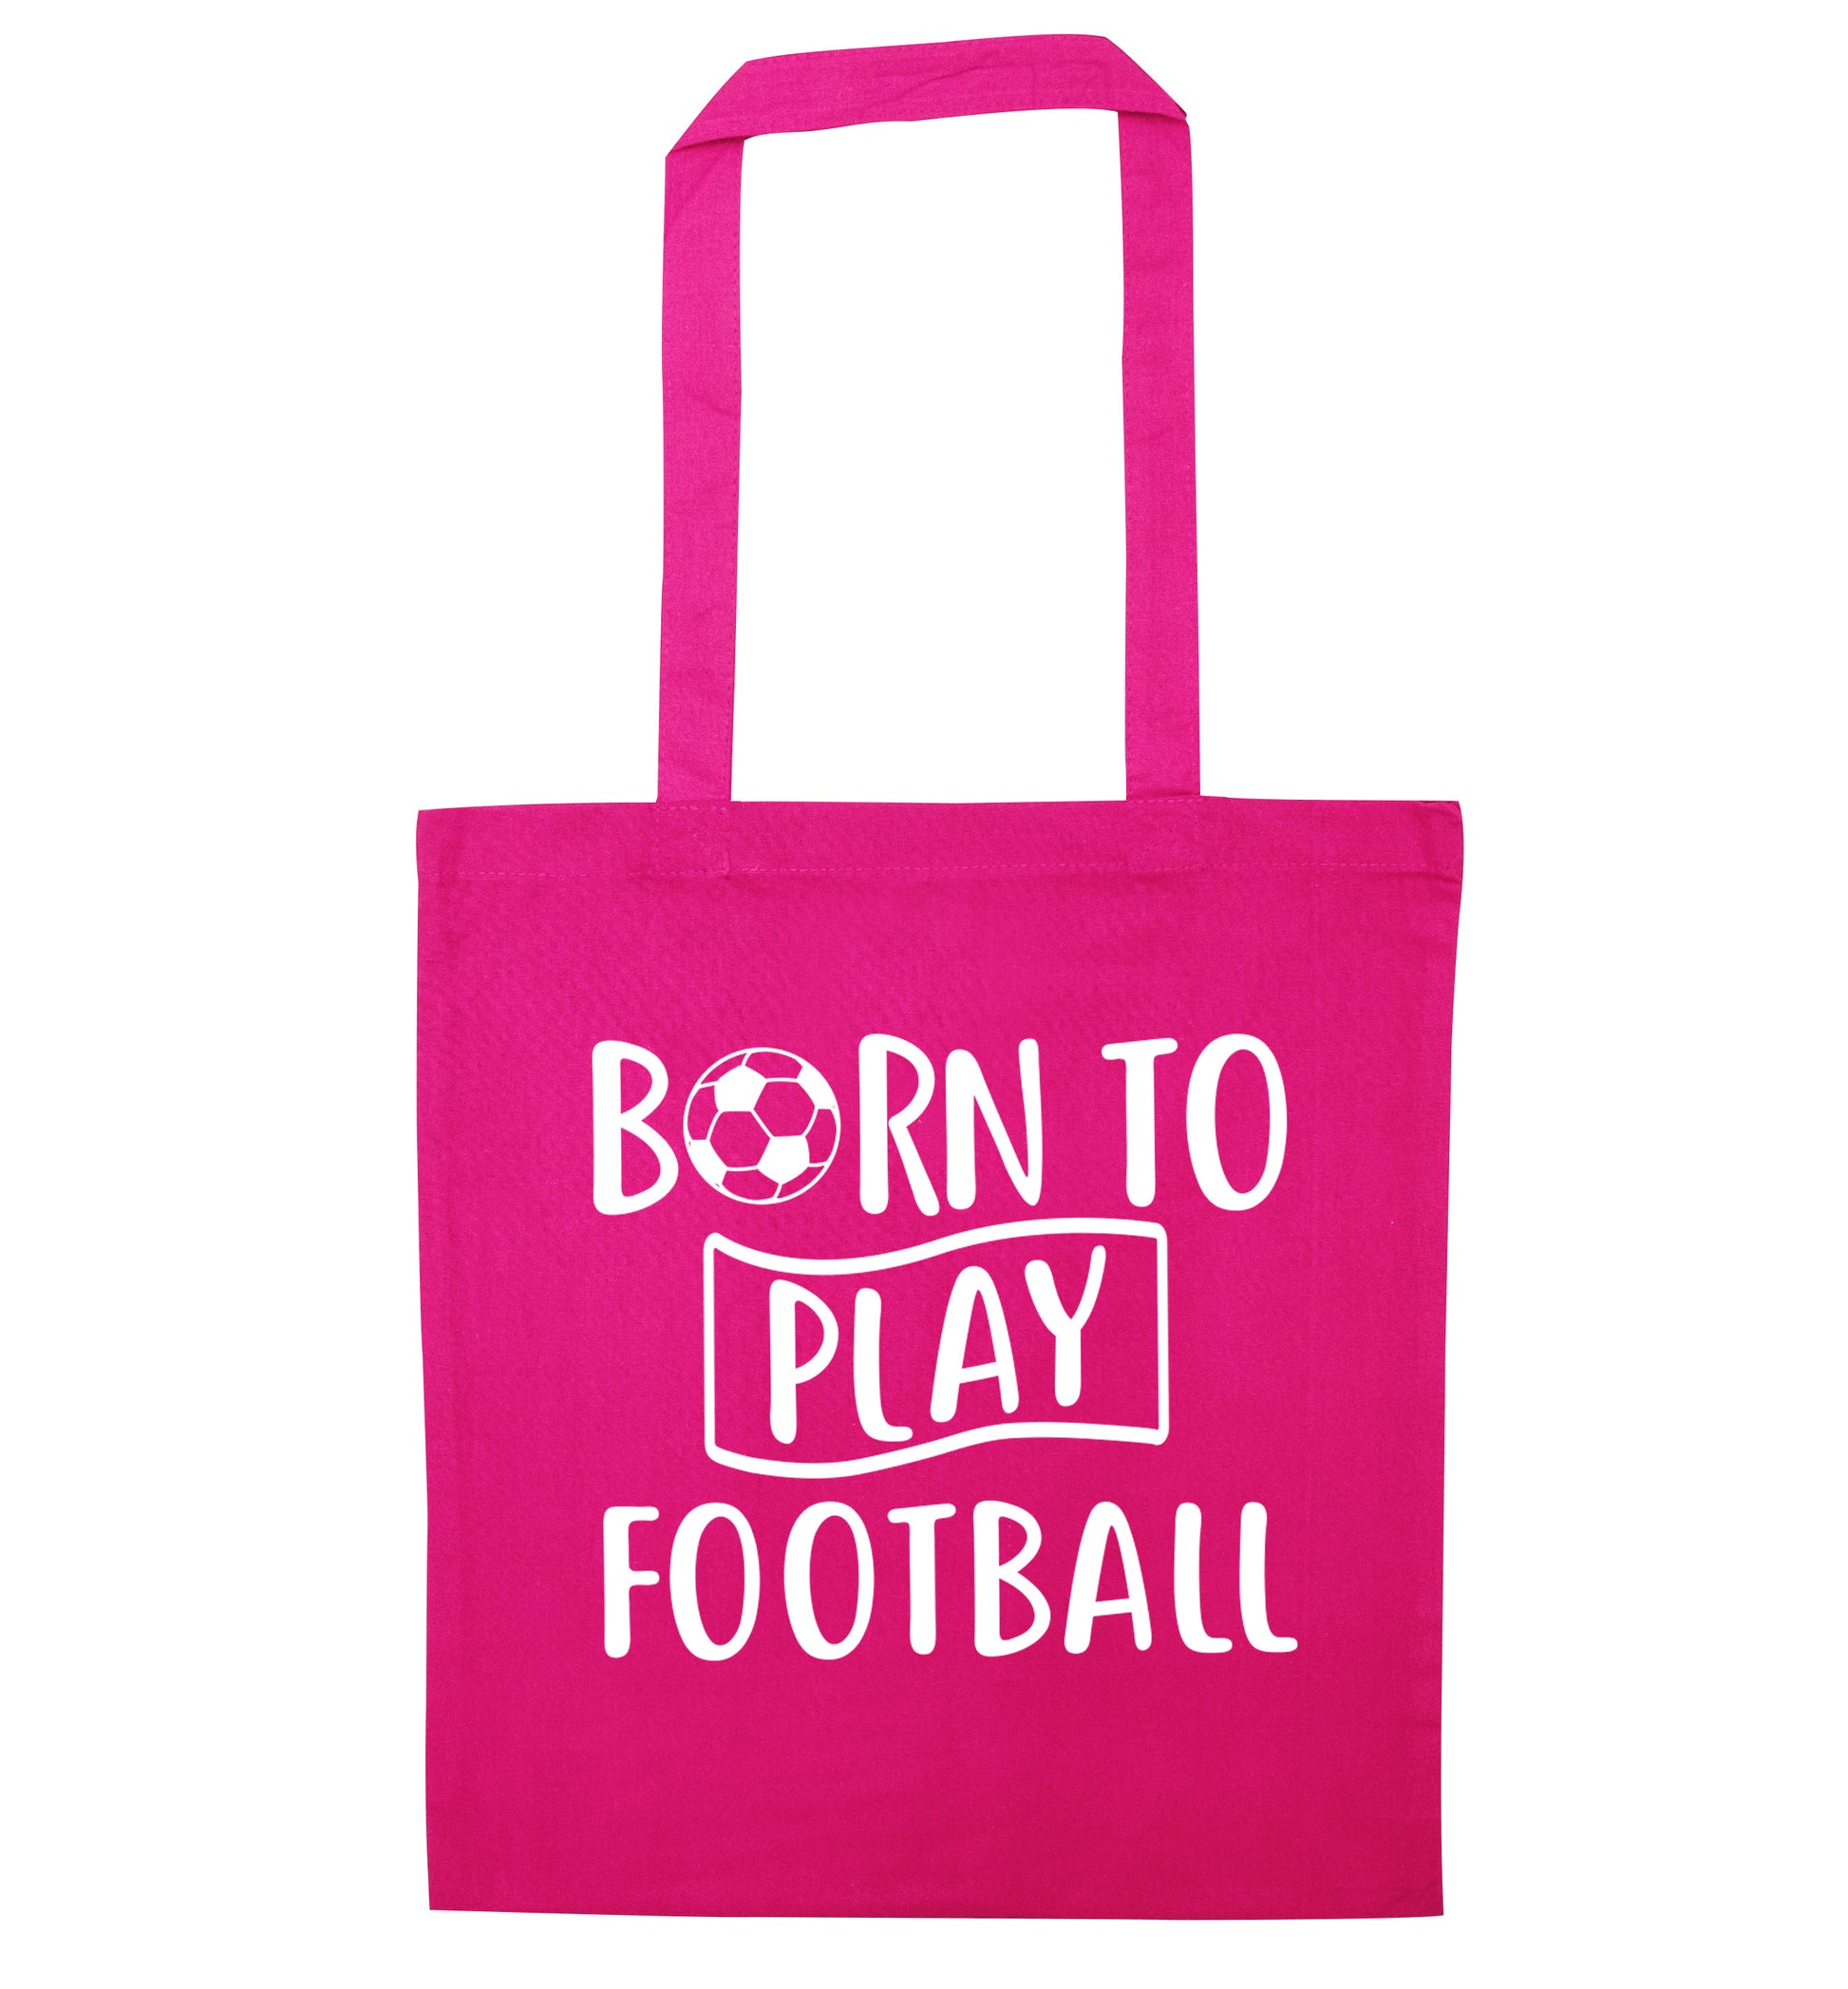 Born to play football pink tote bag